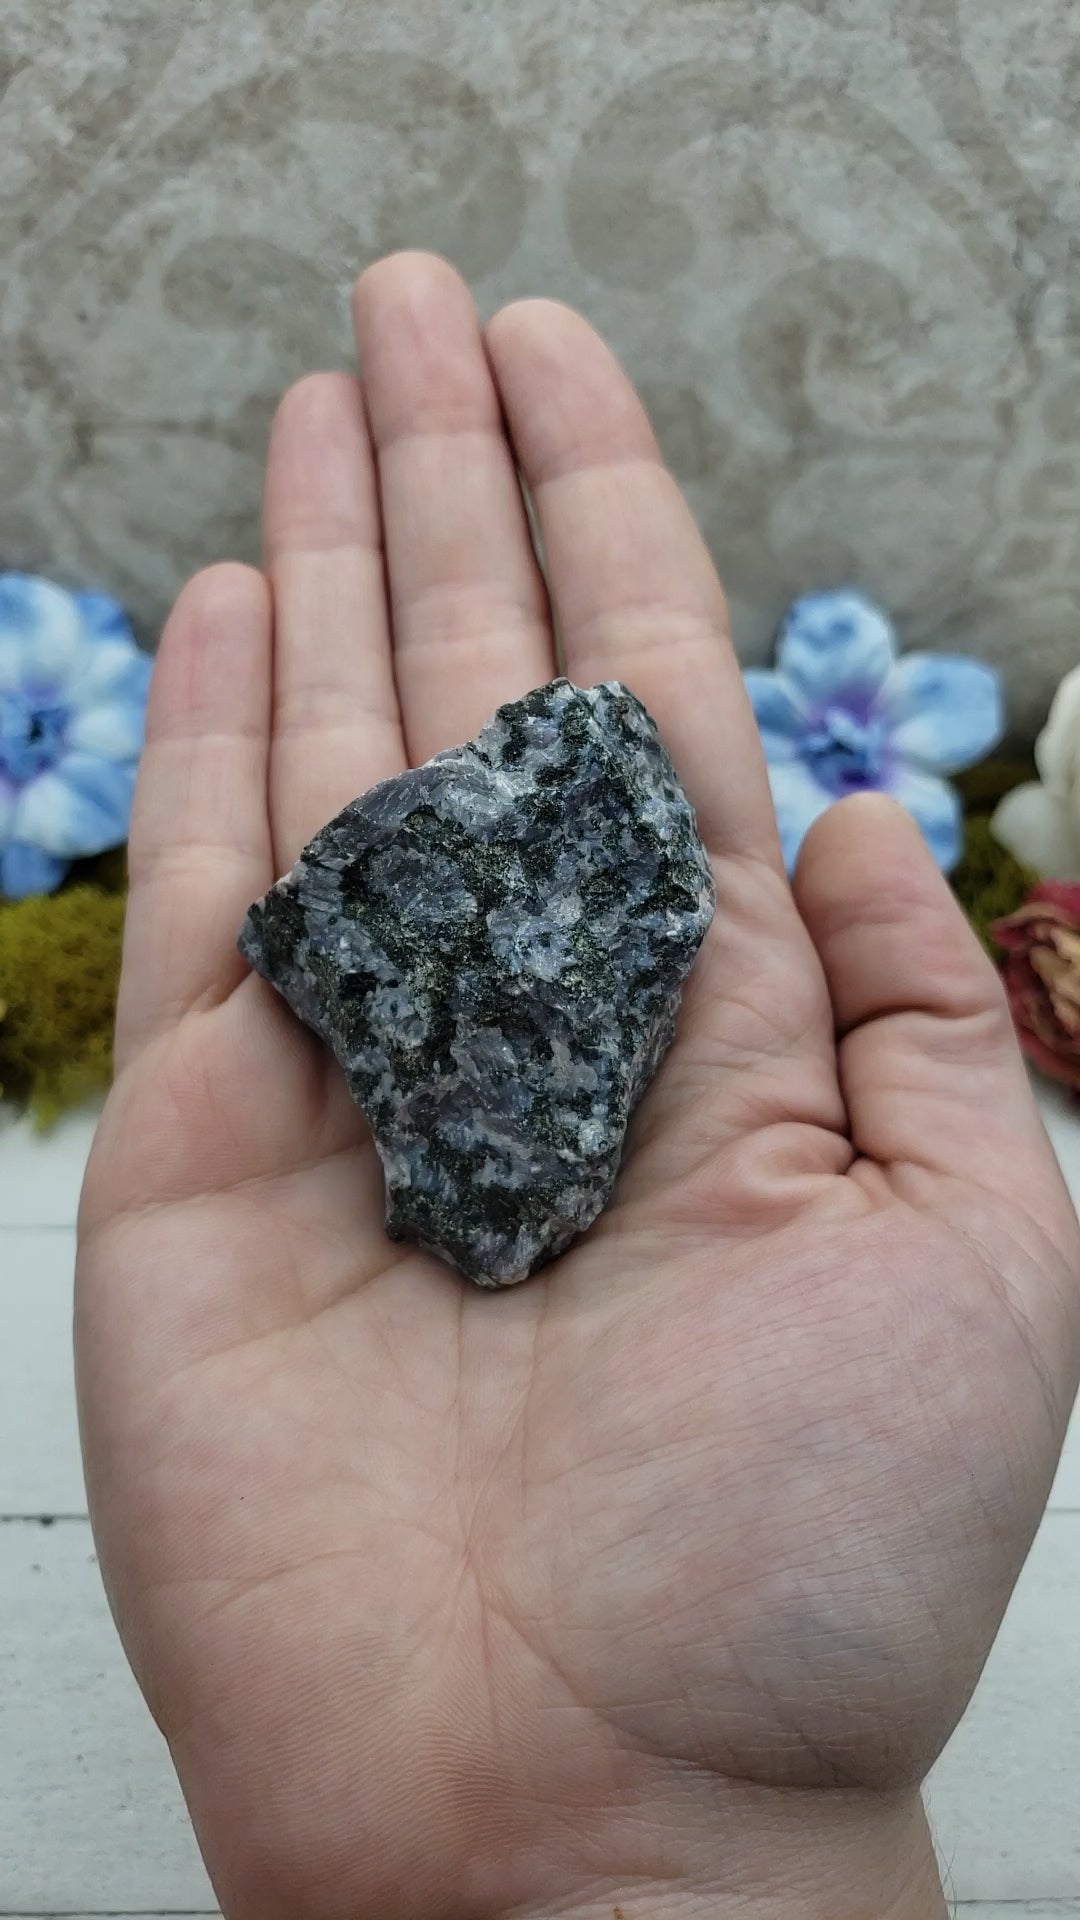 video of Merlinite Stone in hand